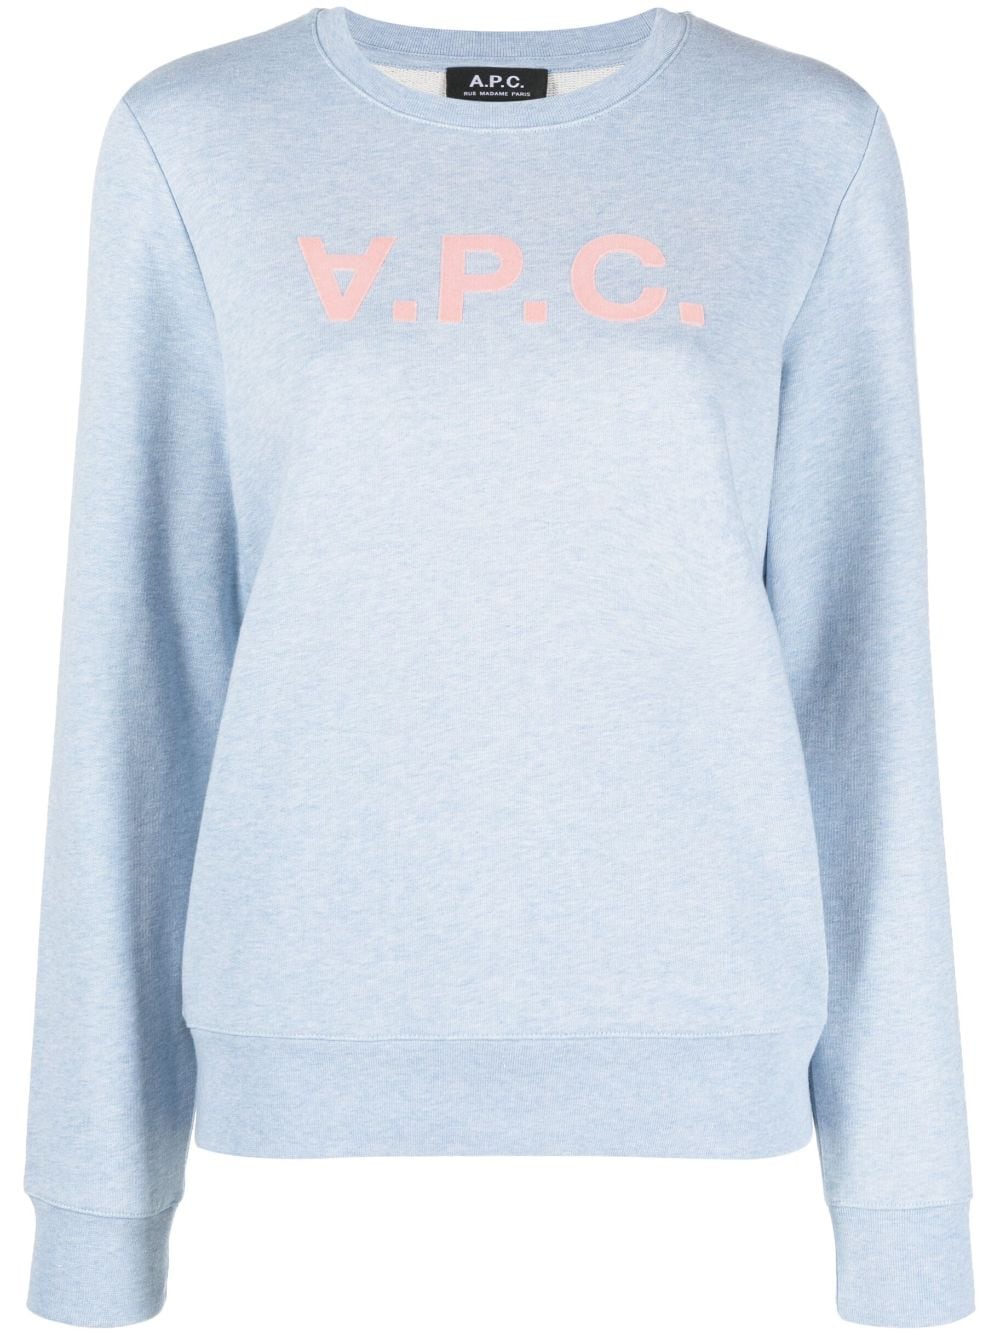 A.P.C. Viva katoenen sweater Blauw